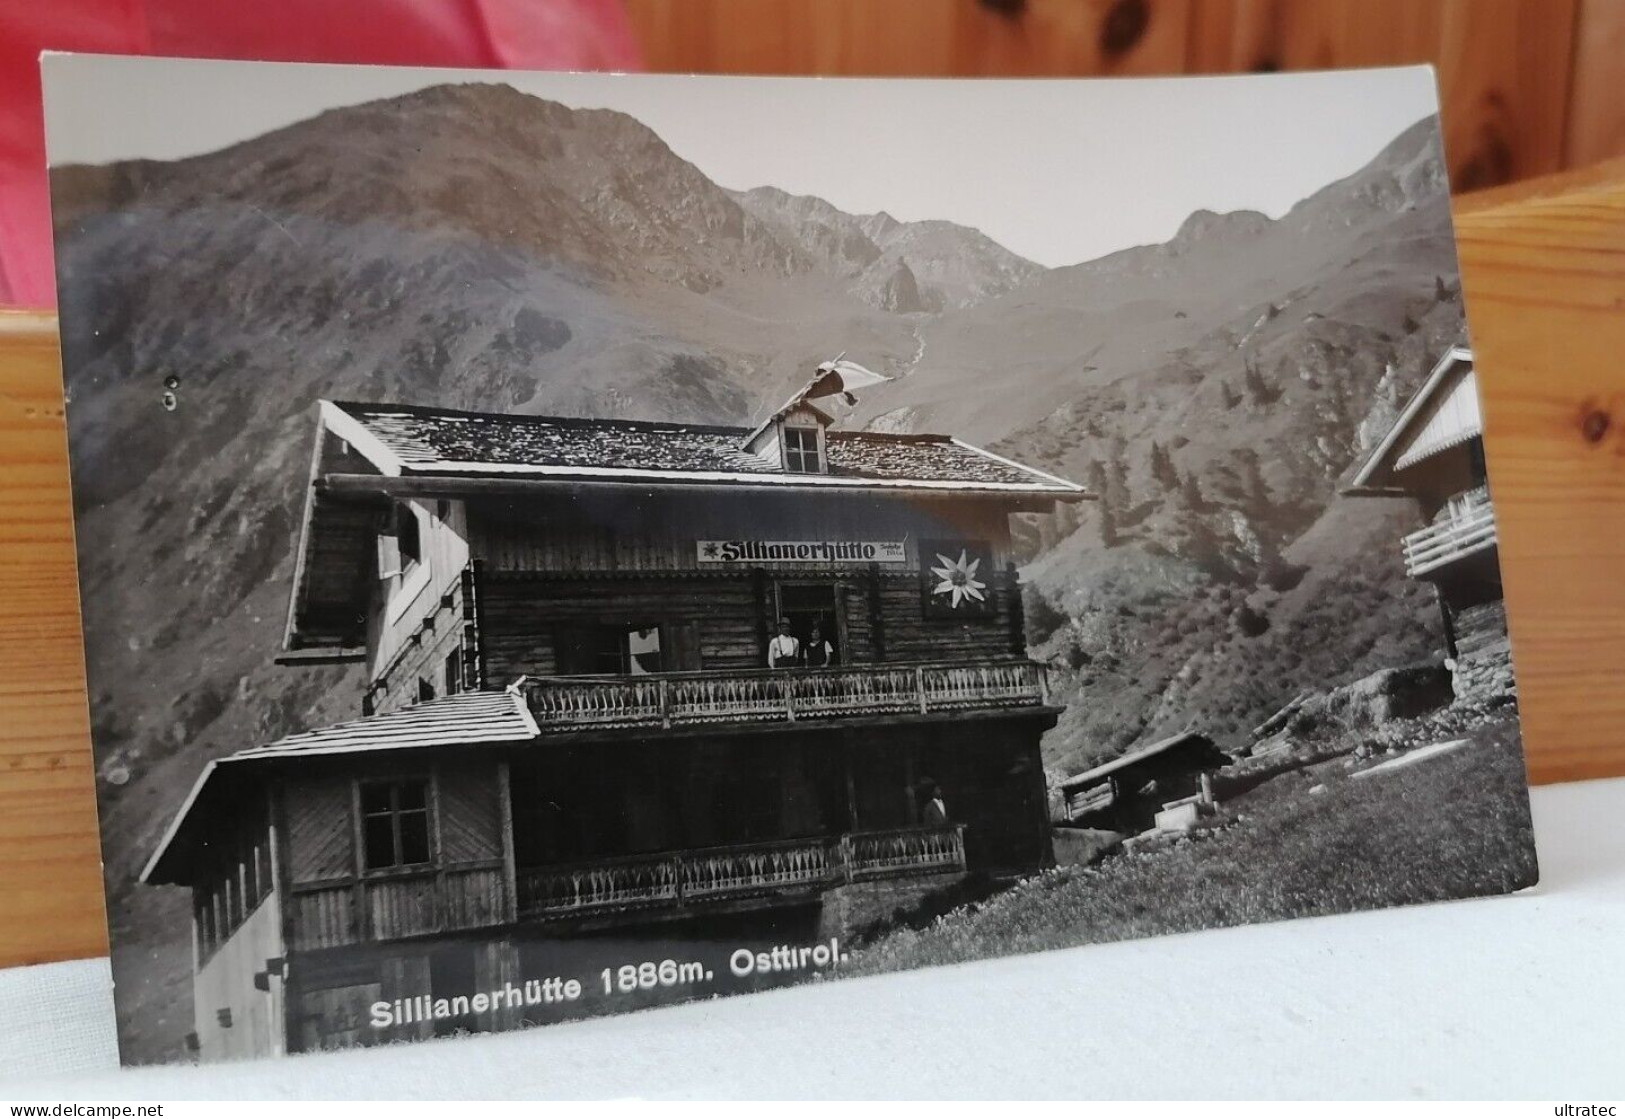 AK "Sillianer Hütte, Ca. 1940 OSTTIROL" SCHÖNE ALTE POSTKARTE VINTAGE ANTIK  GUT ERHALTEN  HEIMAT SAMMLER  ORIGINAL - Sillian